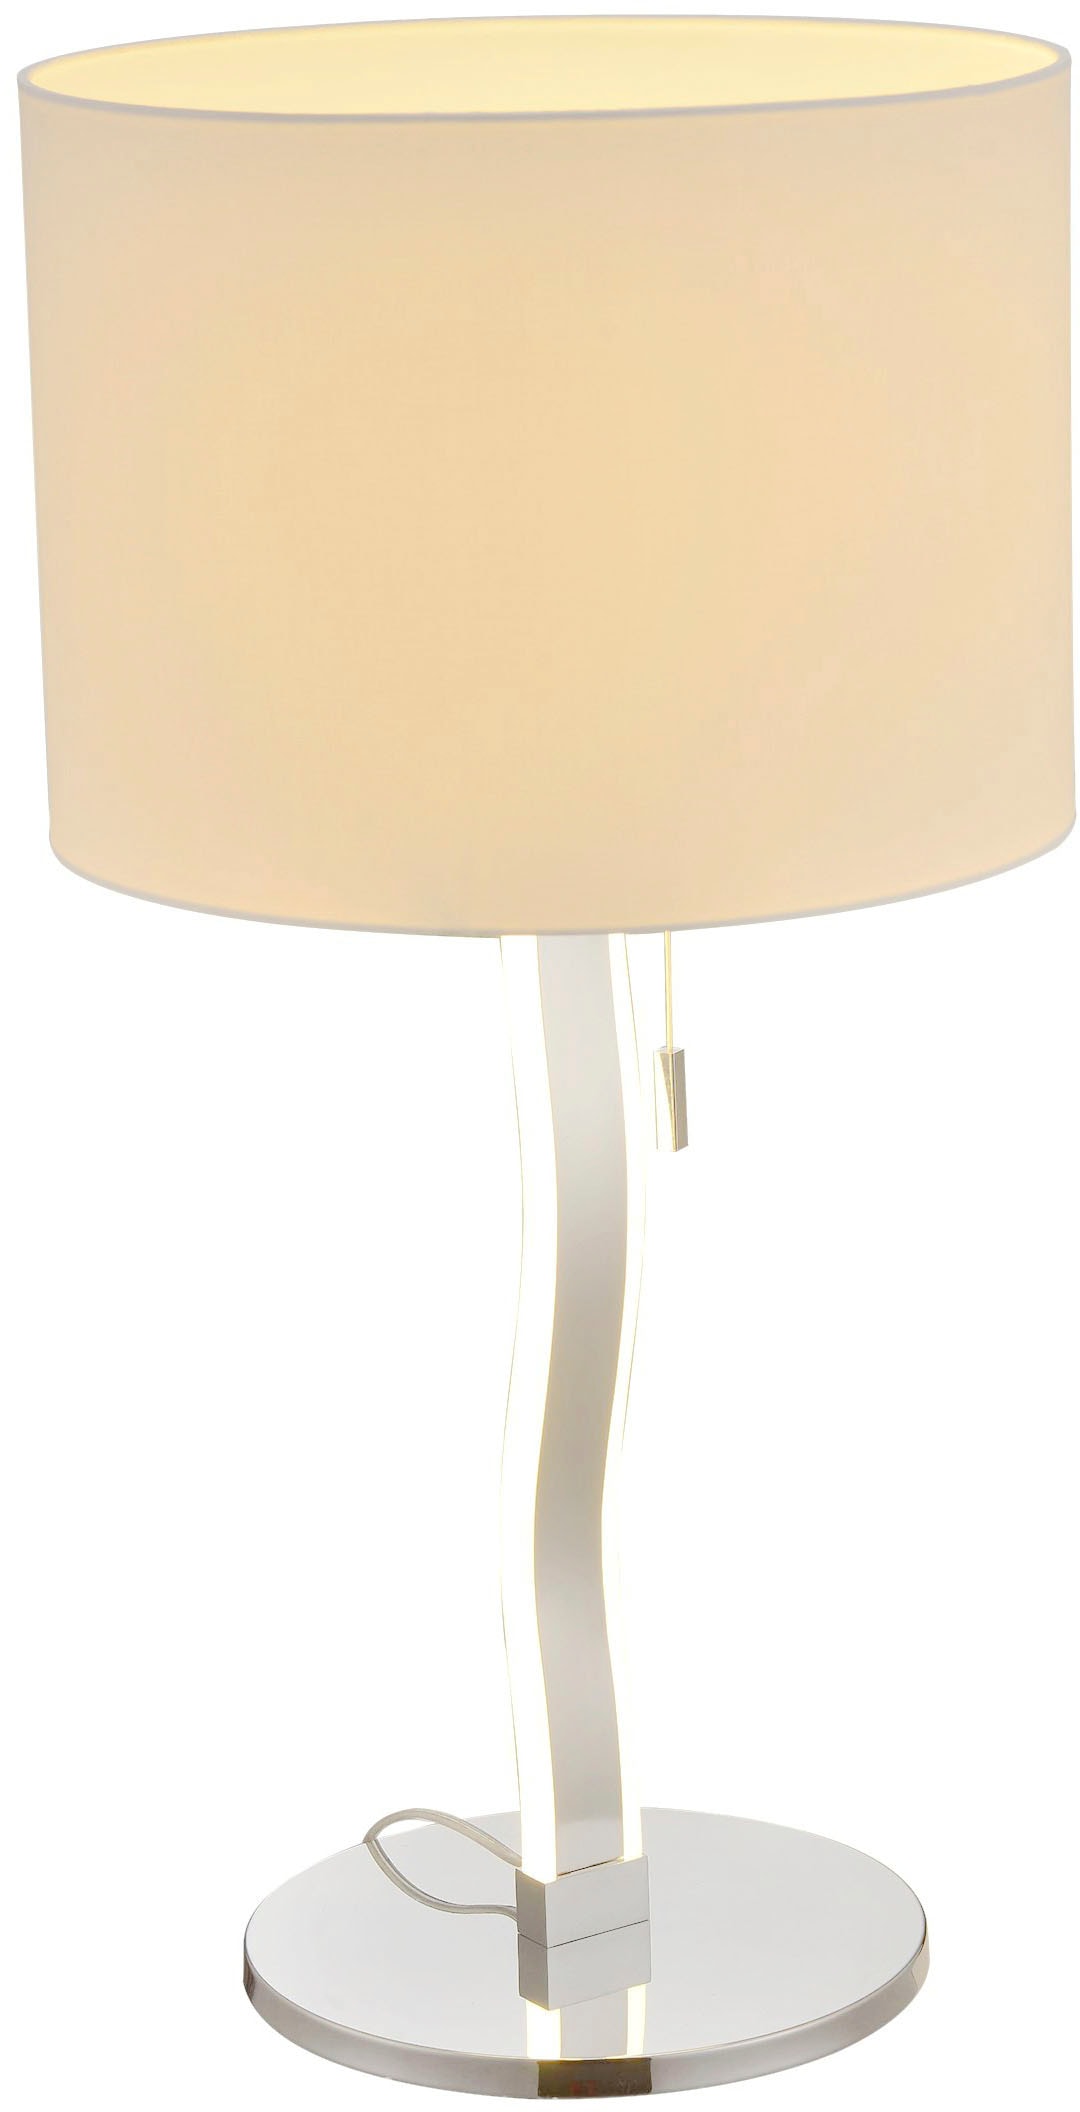 näve LED Tischleuchte »Aurelia«, 1 weiß E27 60W, D: 1x online LED, Höhe max. 35cm Schirm kaufen flammig-flammig, incl. 68cm, excl